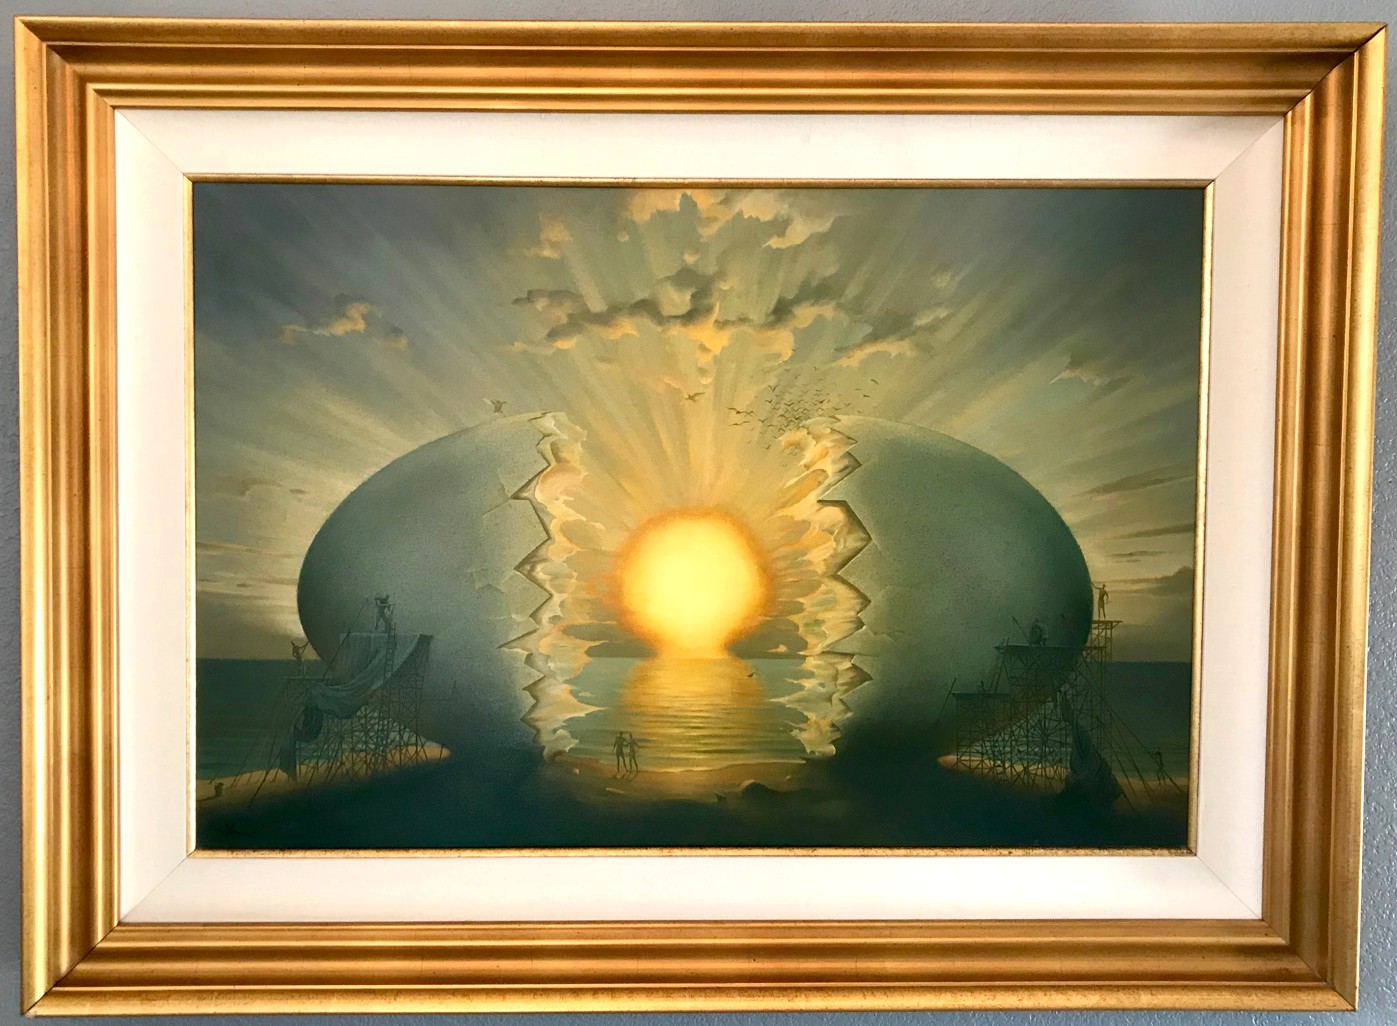 Sunrise by the ocean II - Original painting by Vladimir Kush